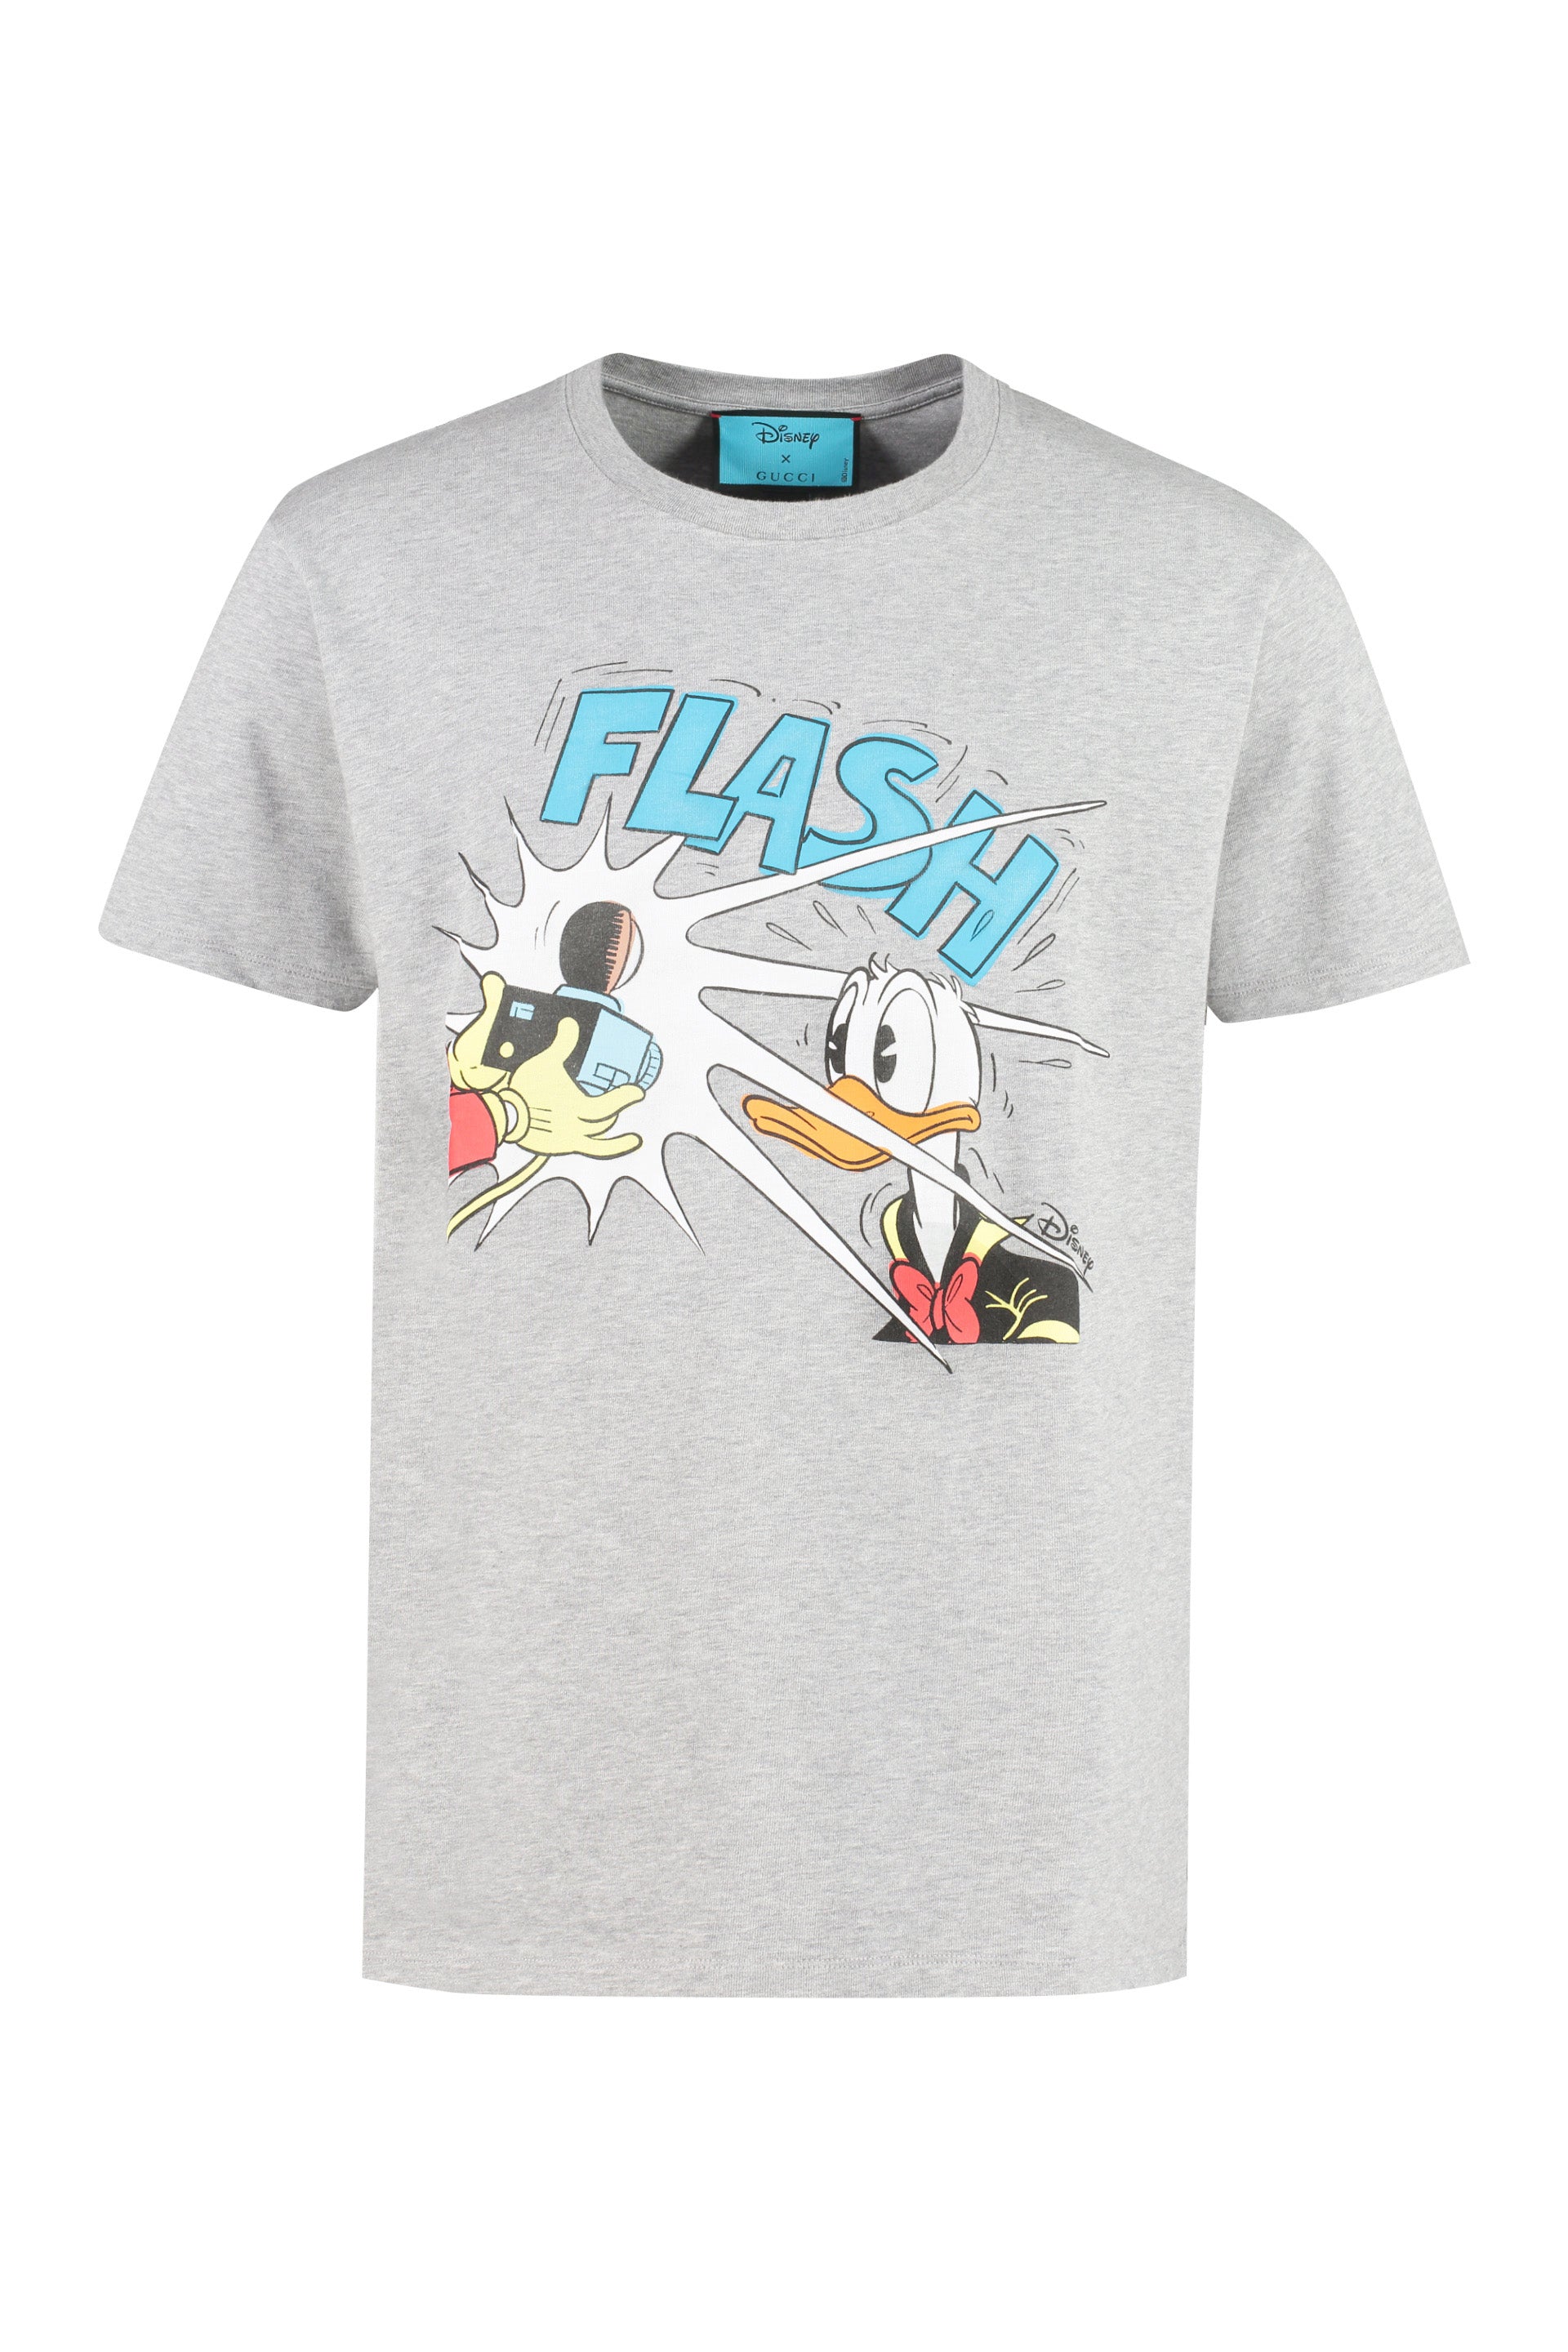 Gucci - Cotton crew-neck T-shirt - Donald Duck Disney x Gucci grey